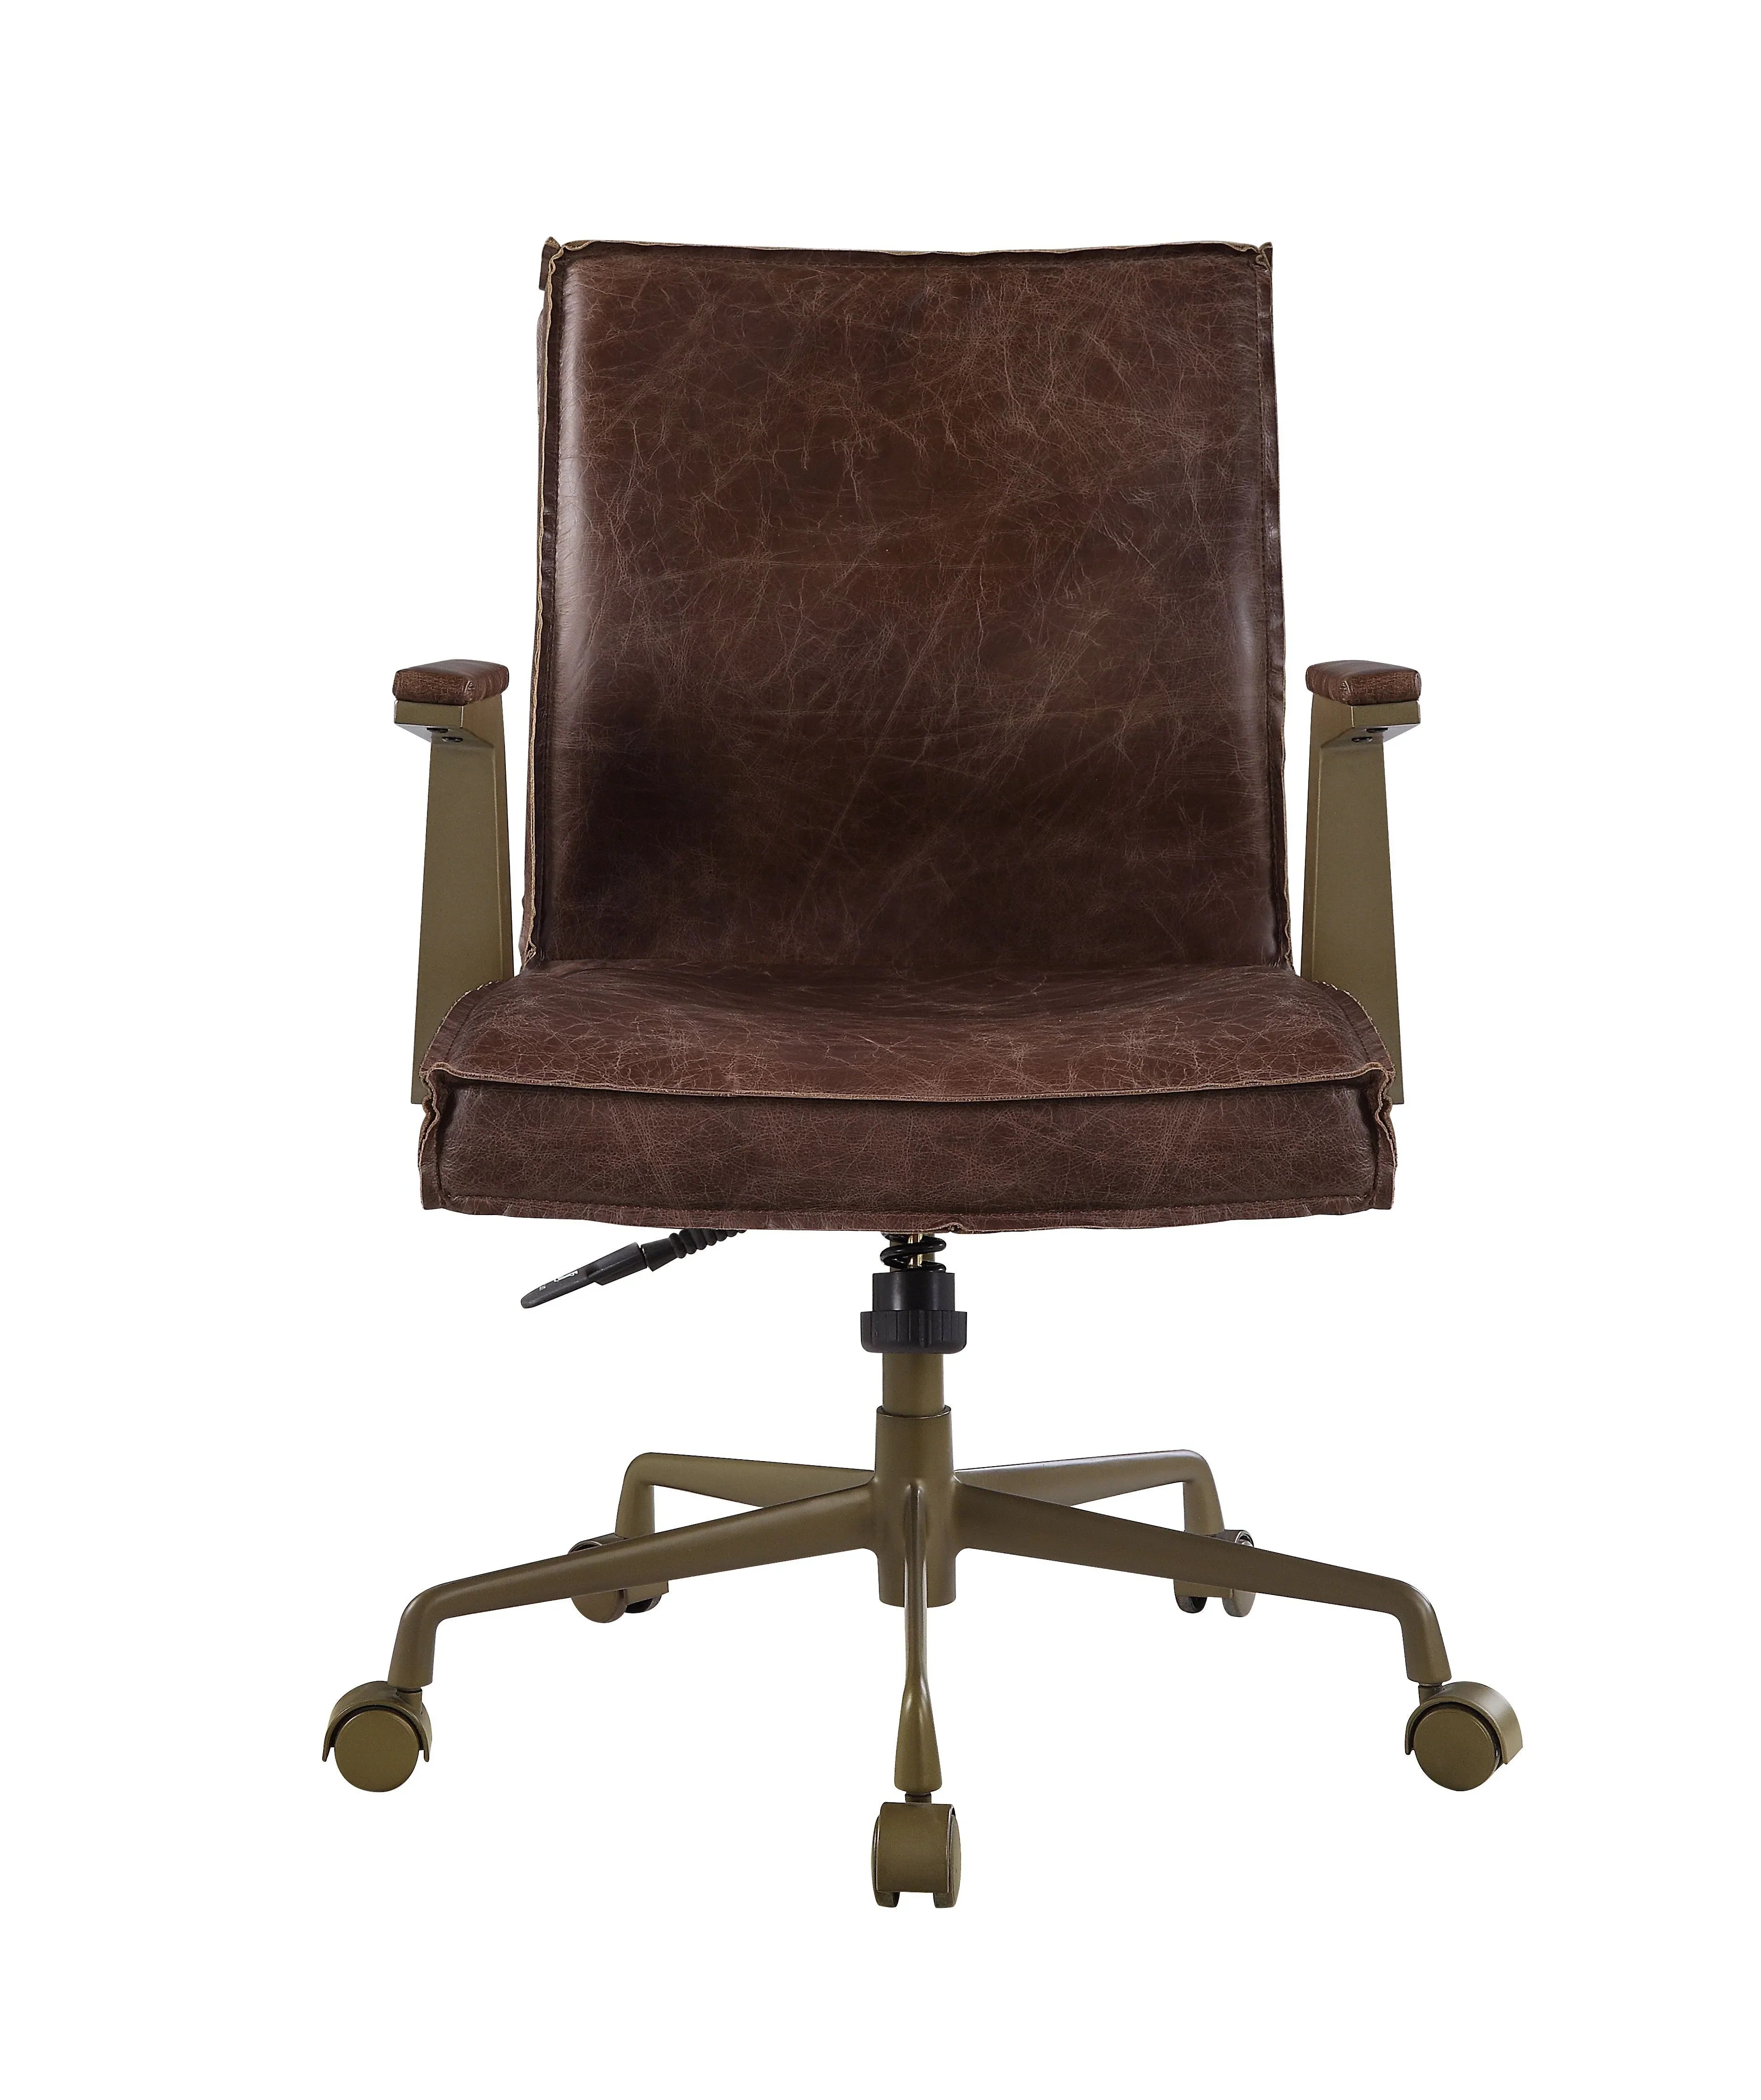 Attica Espresso Top Grain Leather Executive Office Chair Model 92483 By ACME Furniture